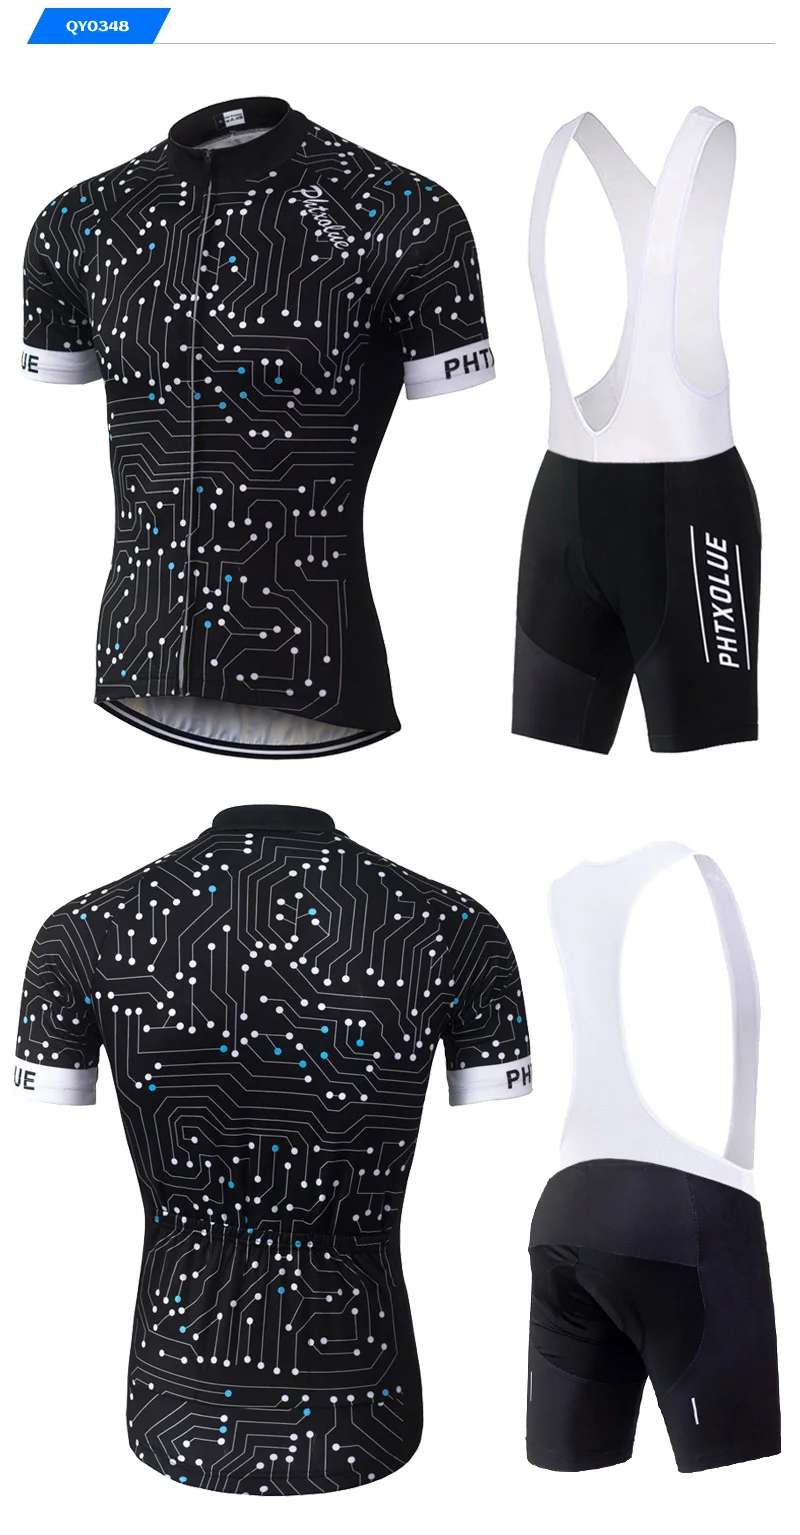 Phtxolue Мужская велосипедная Джерси Набор Pro Team дышащая велосипедная одежда для горного велосипеда велосипедная Одежда для велоспорта